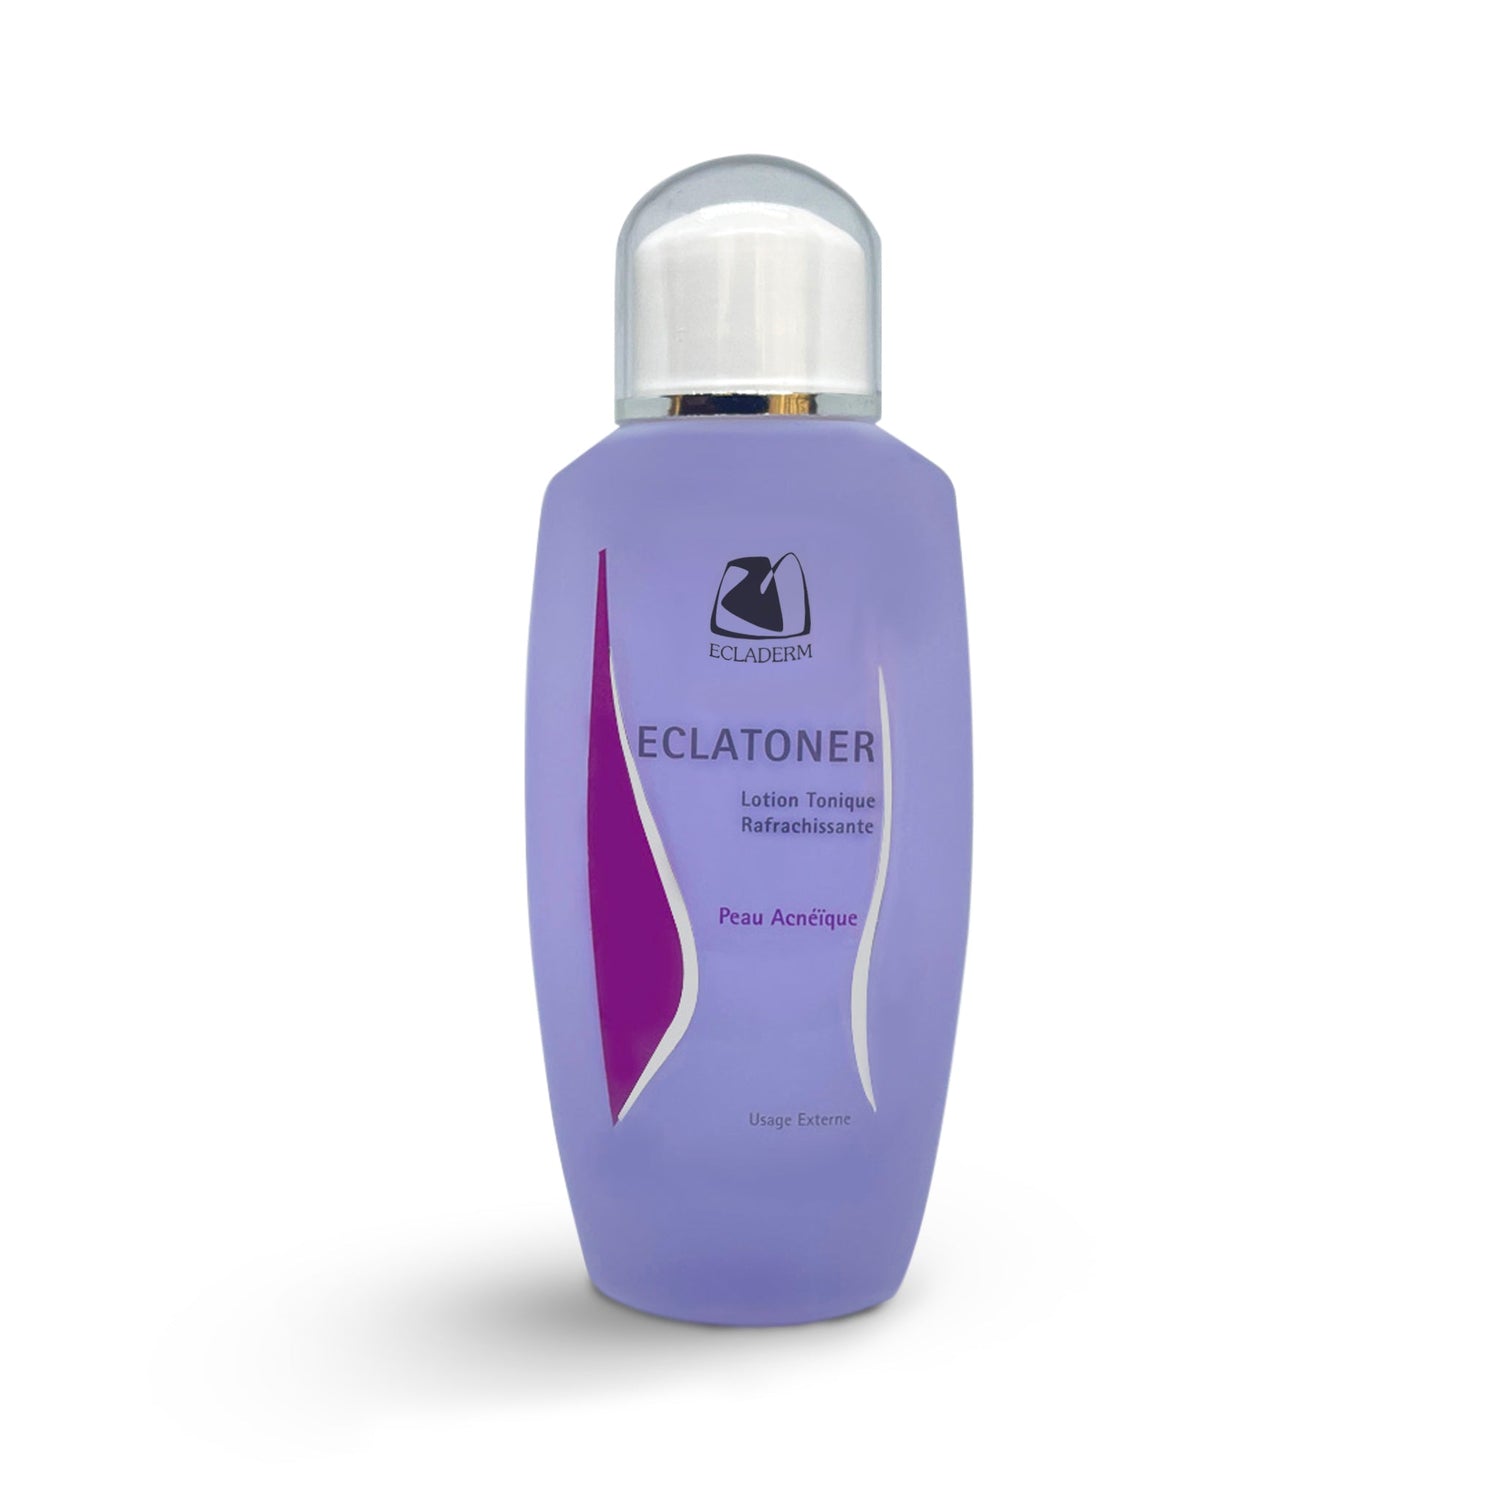 Ecladerm Eclatoner Tonic Solution for Acne-Prone Skin